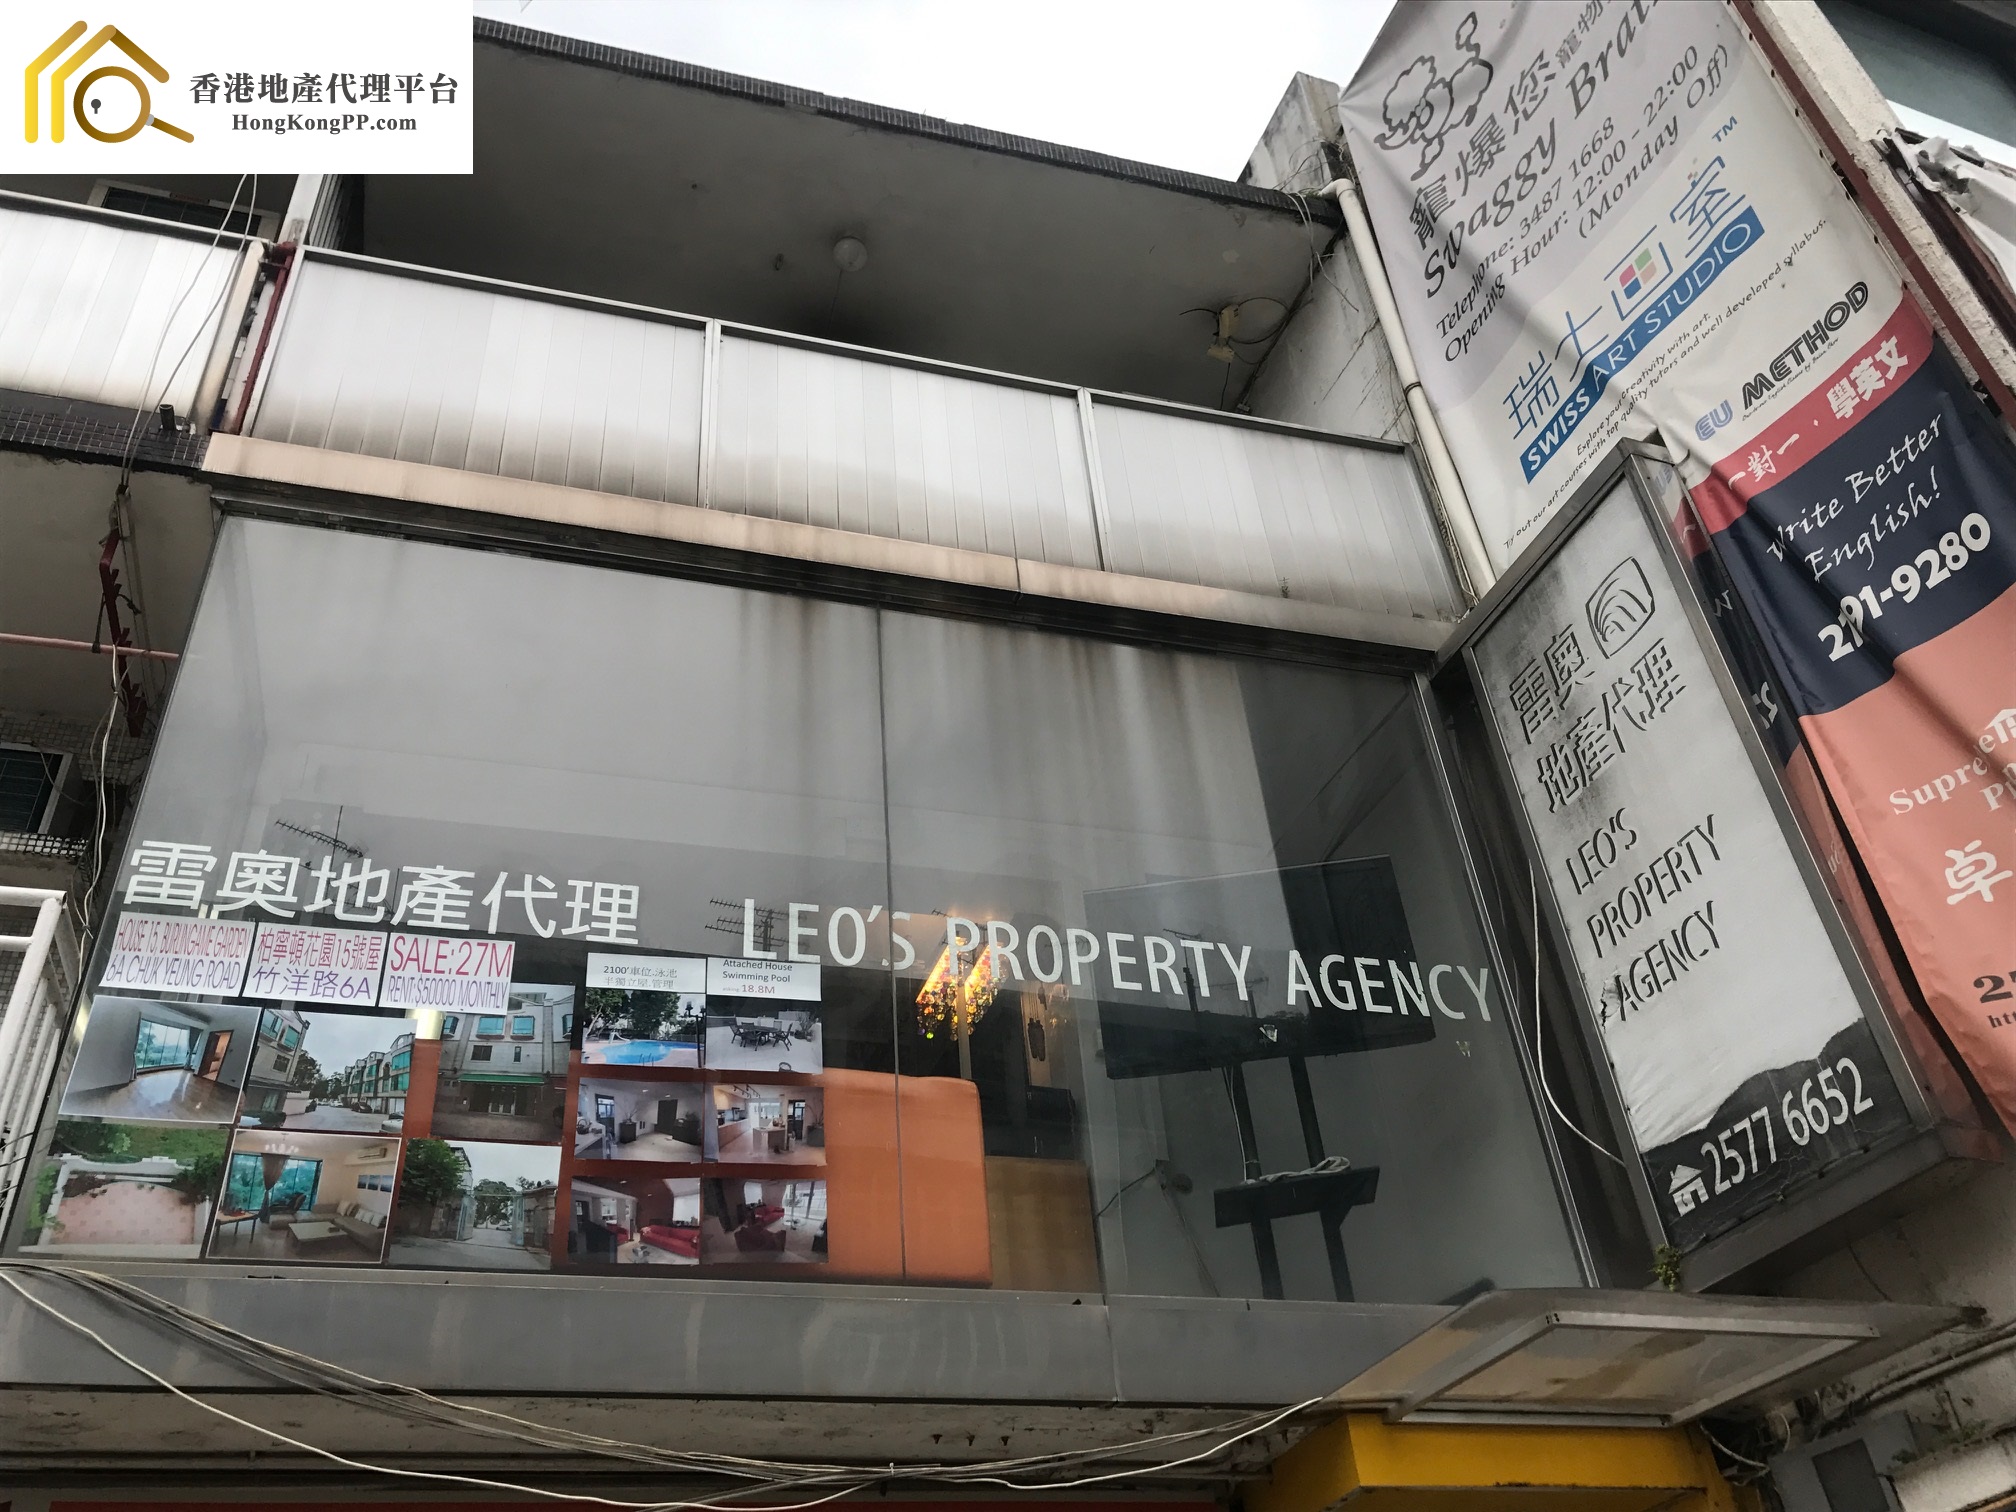 Village HouseEstate Agent: 雷奧地產 LEO's Property Agency